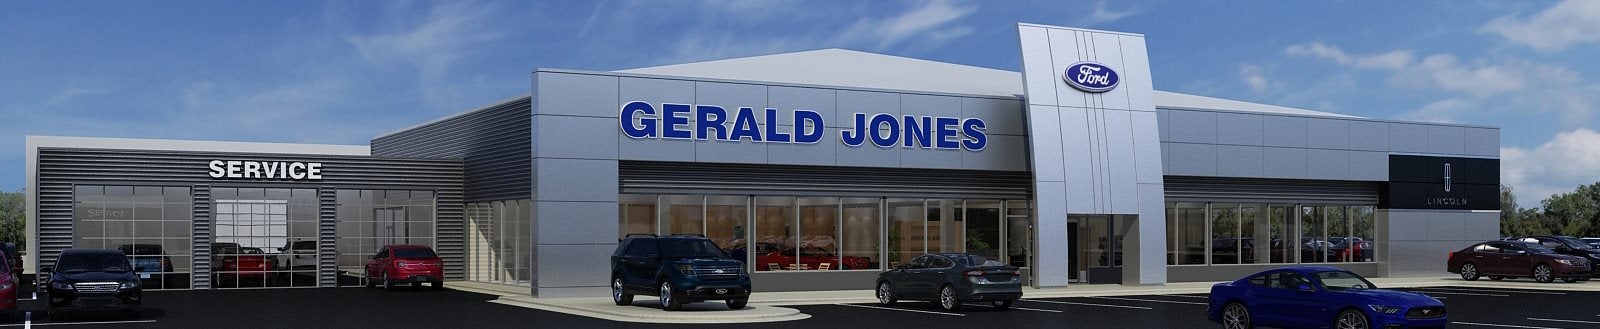 Gerald Jones Ford